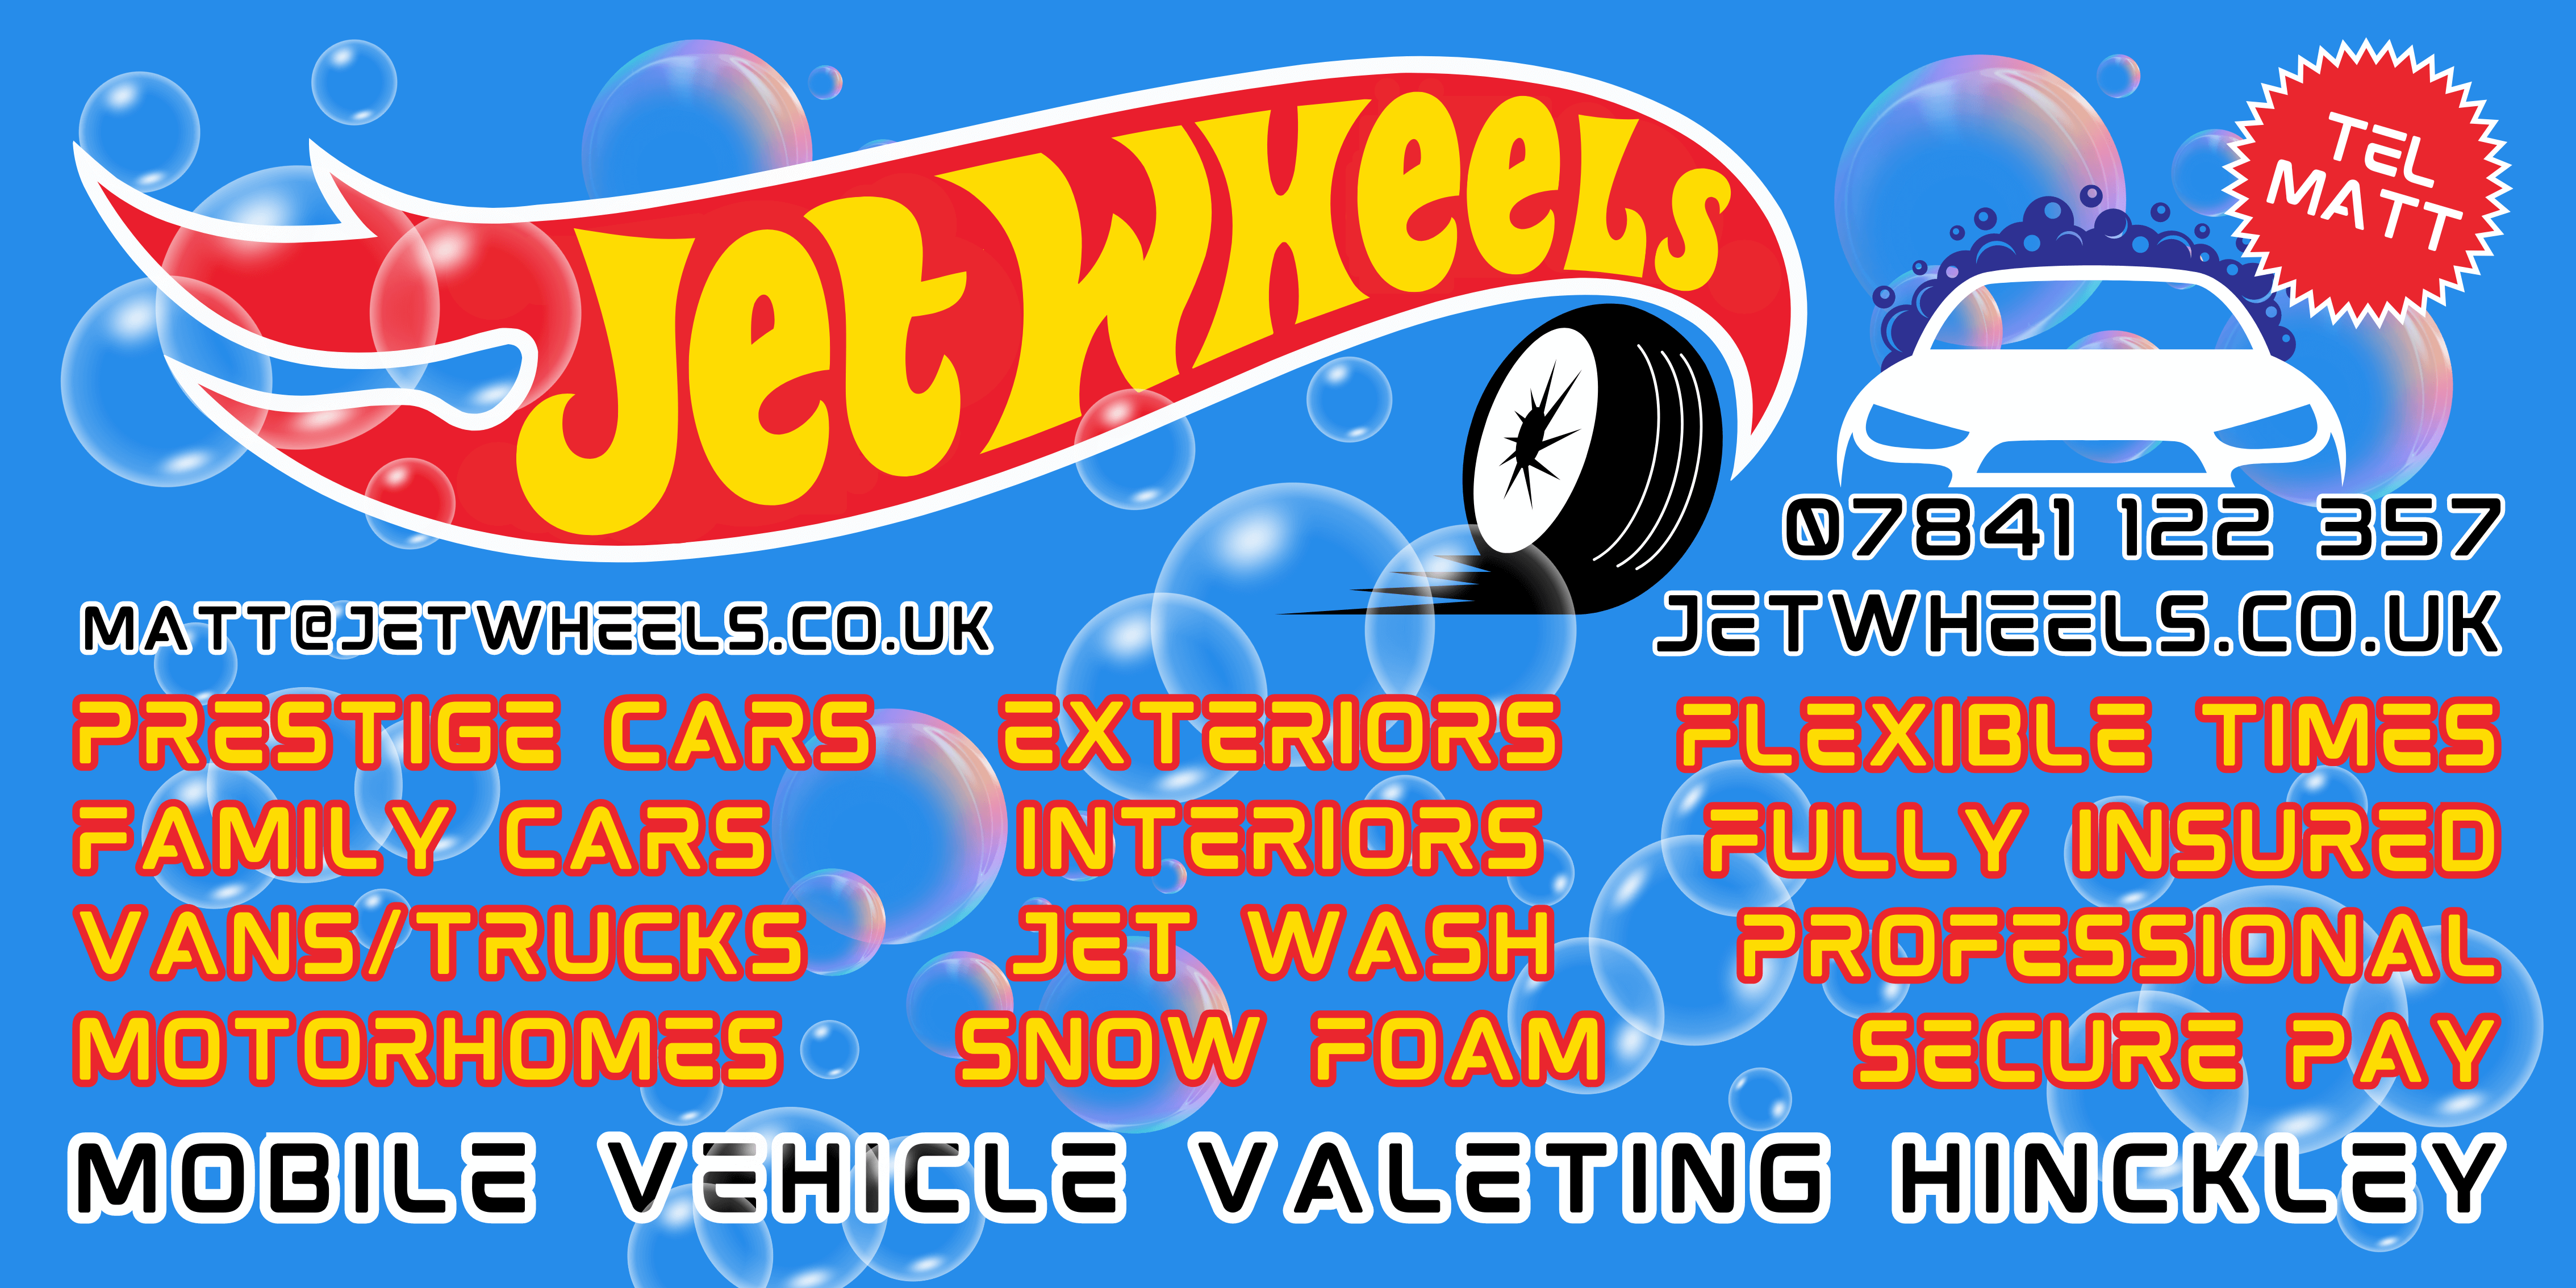 about Jet Wheels mobile Valeting Hinckley